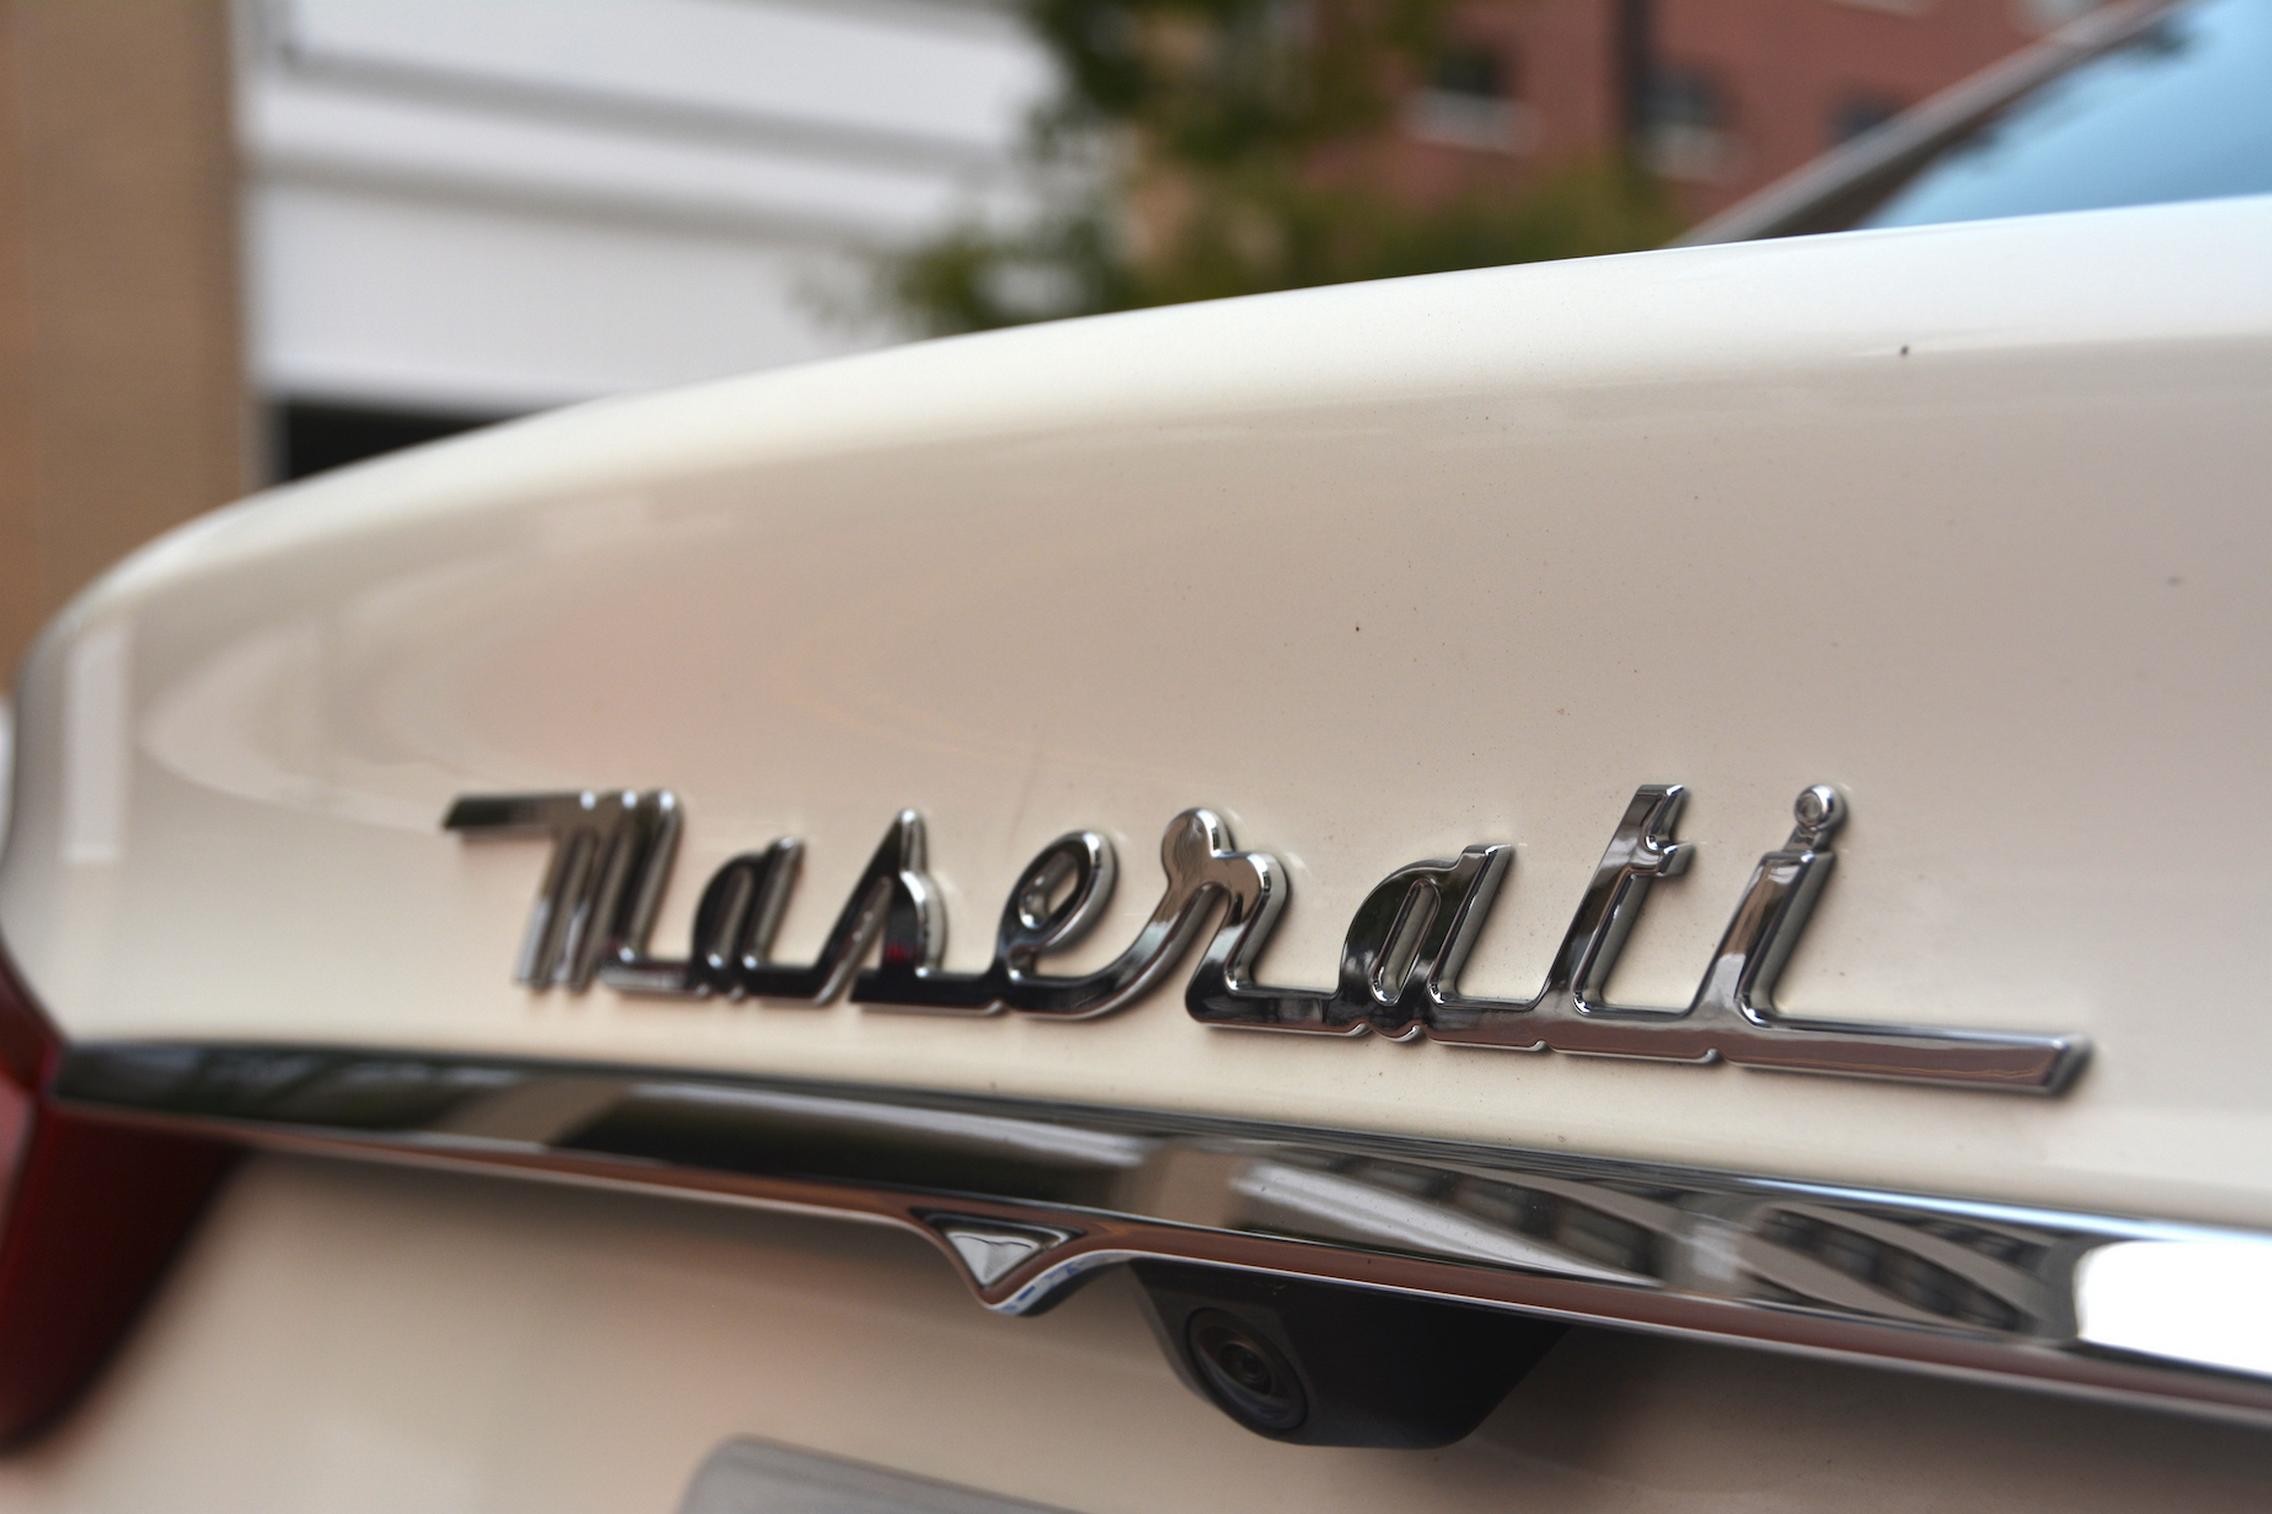 Maserati Badge